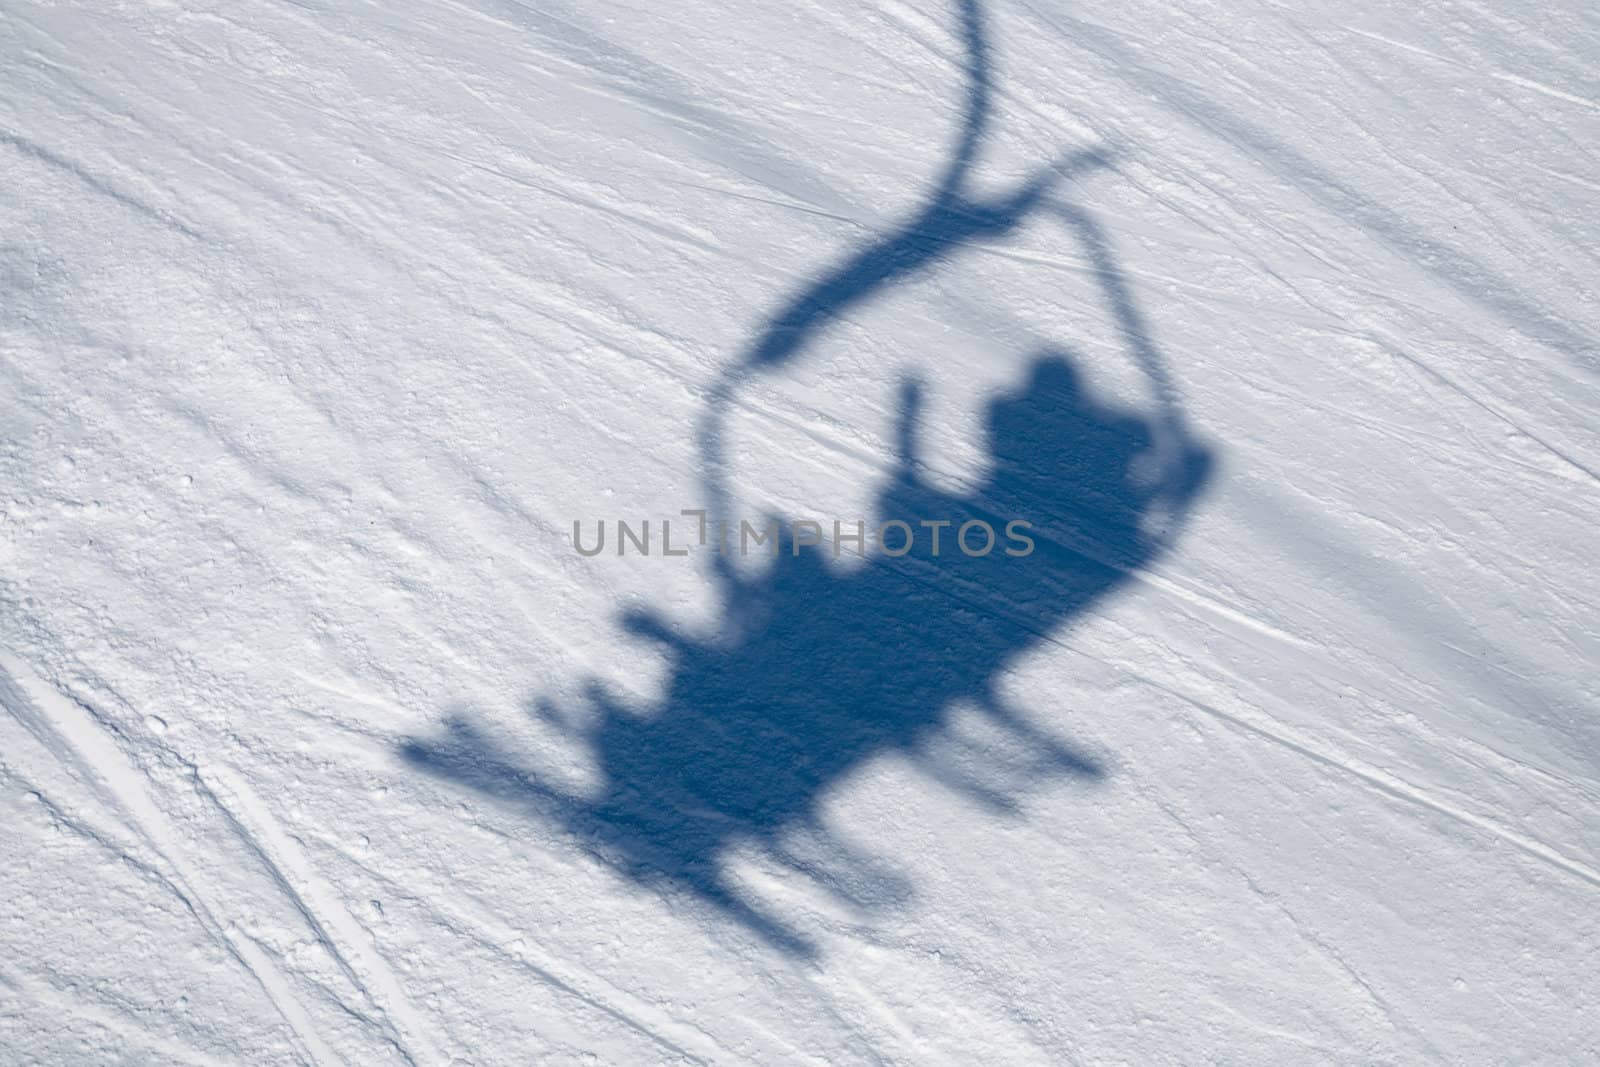 ski lift shadow on the snow